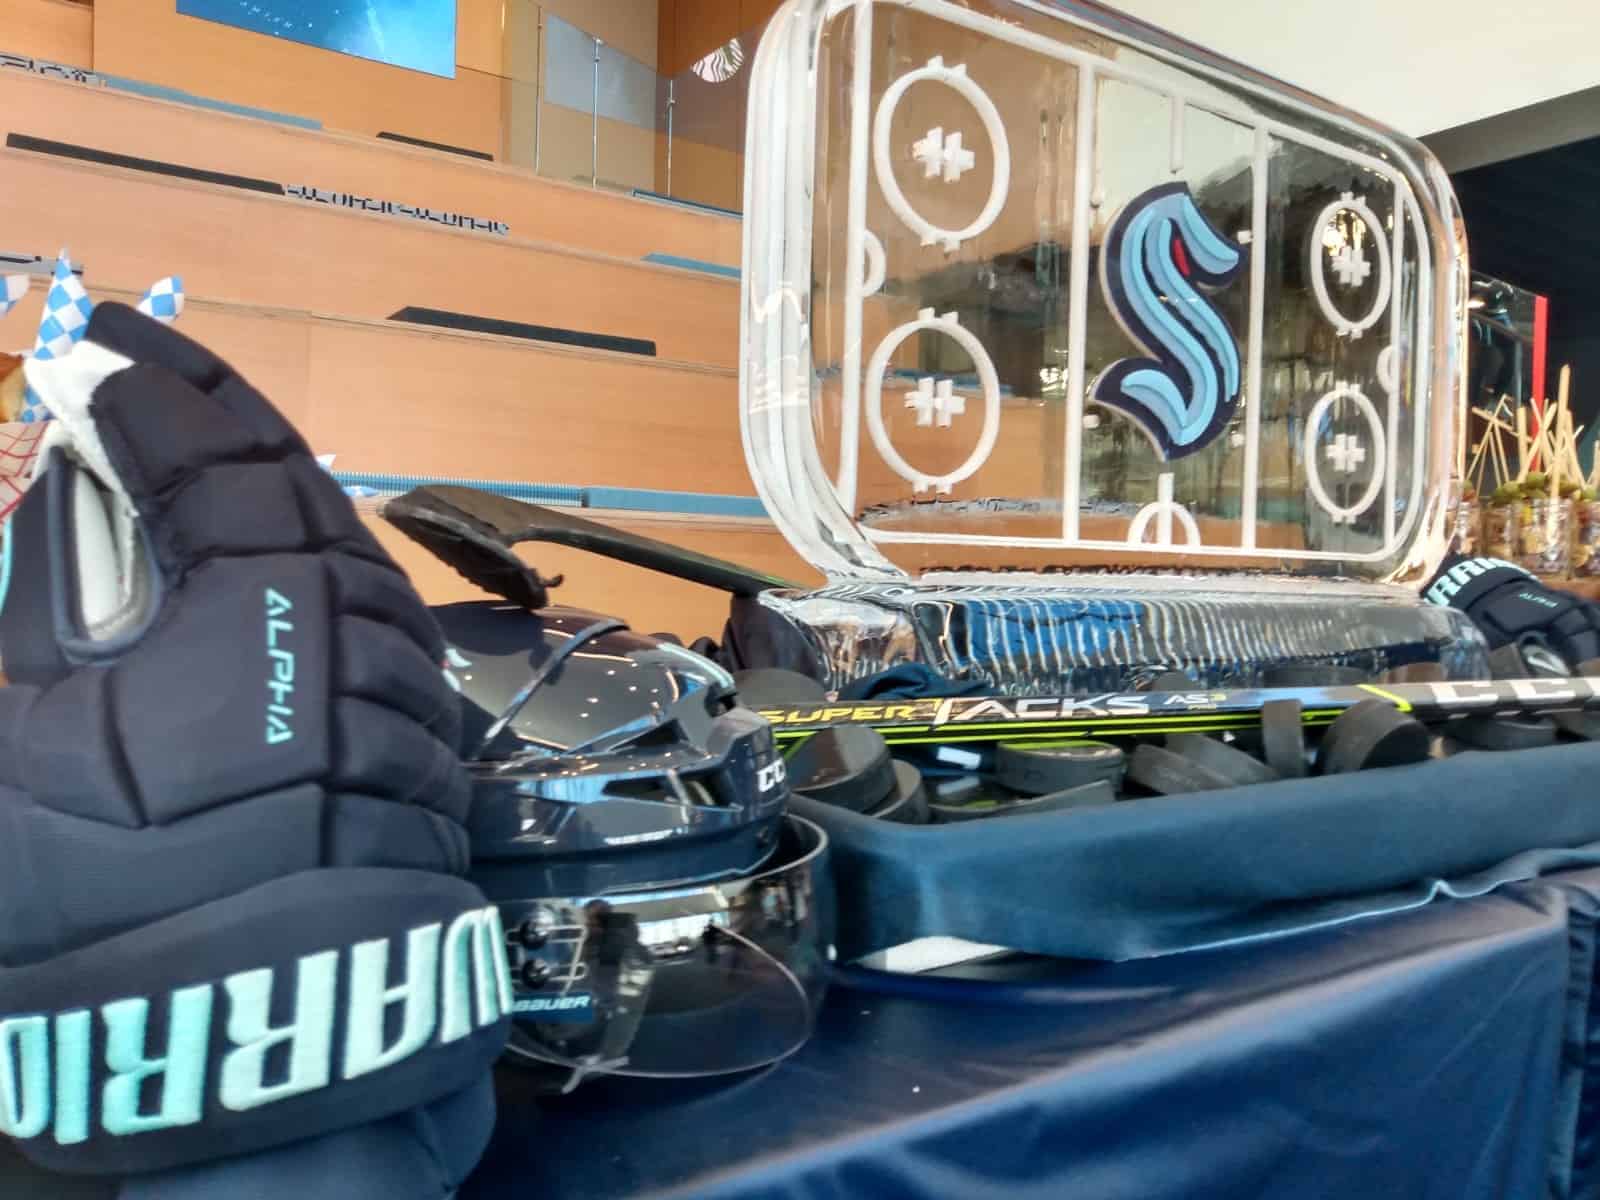 The NHL's Seattle Kraken Receive Monstrous Reception